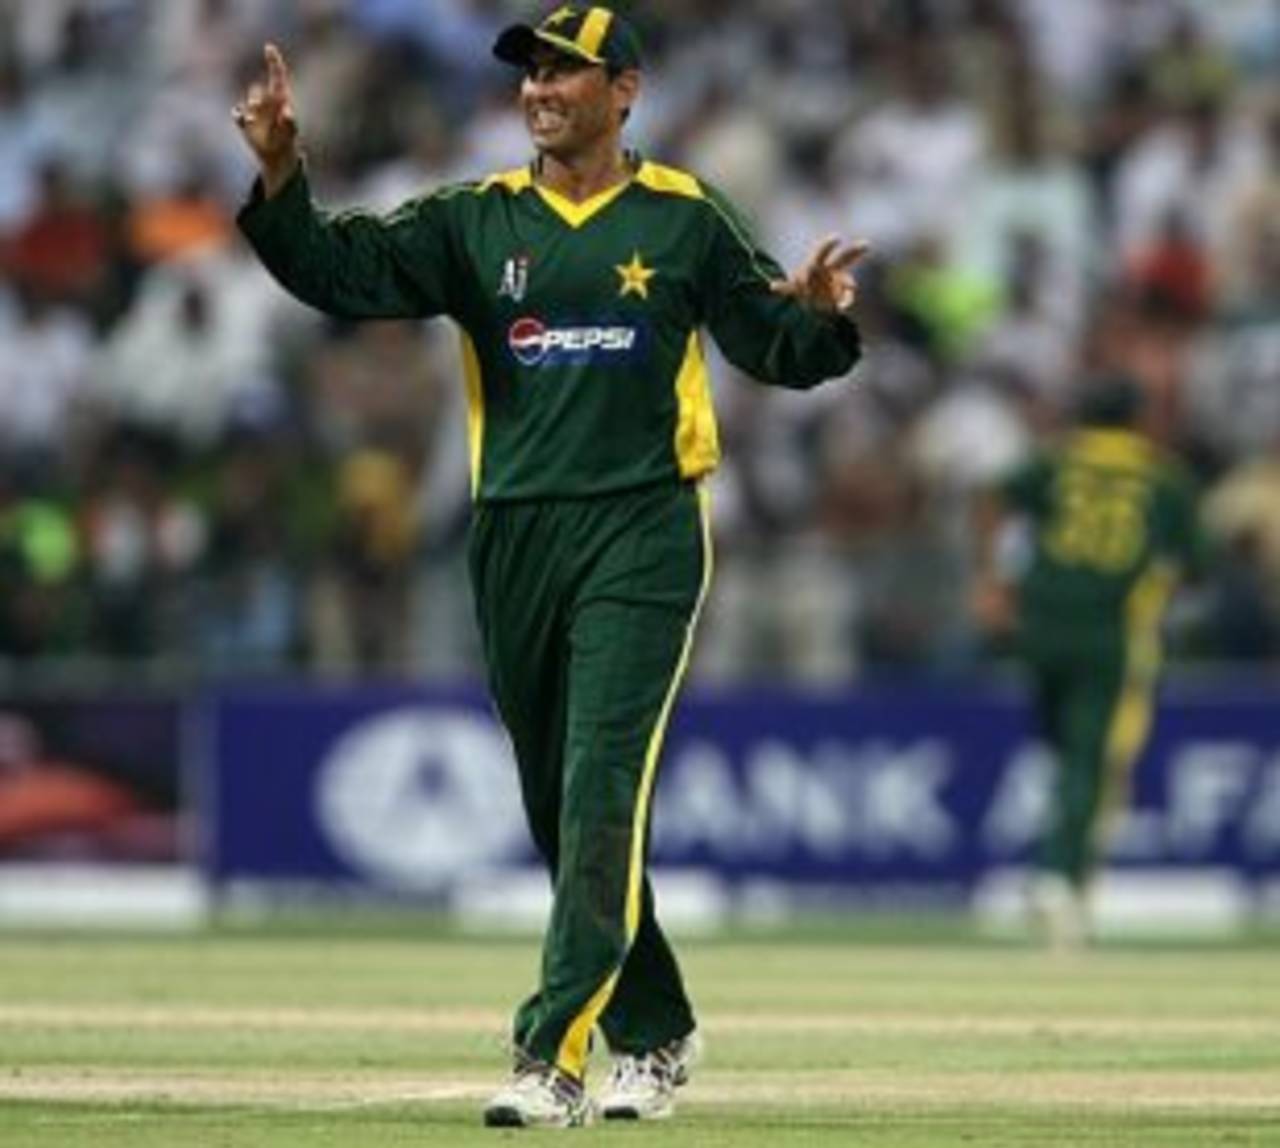 Younis Khan makes changes to his field, Pakistan v New Zealand, 2nd ODI, Abu Dhabi, November 6, 2009